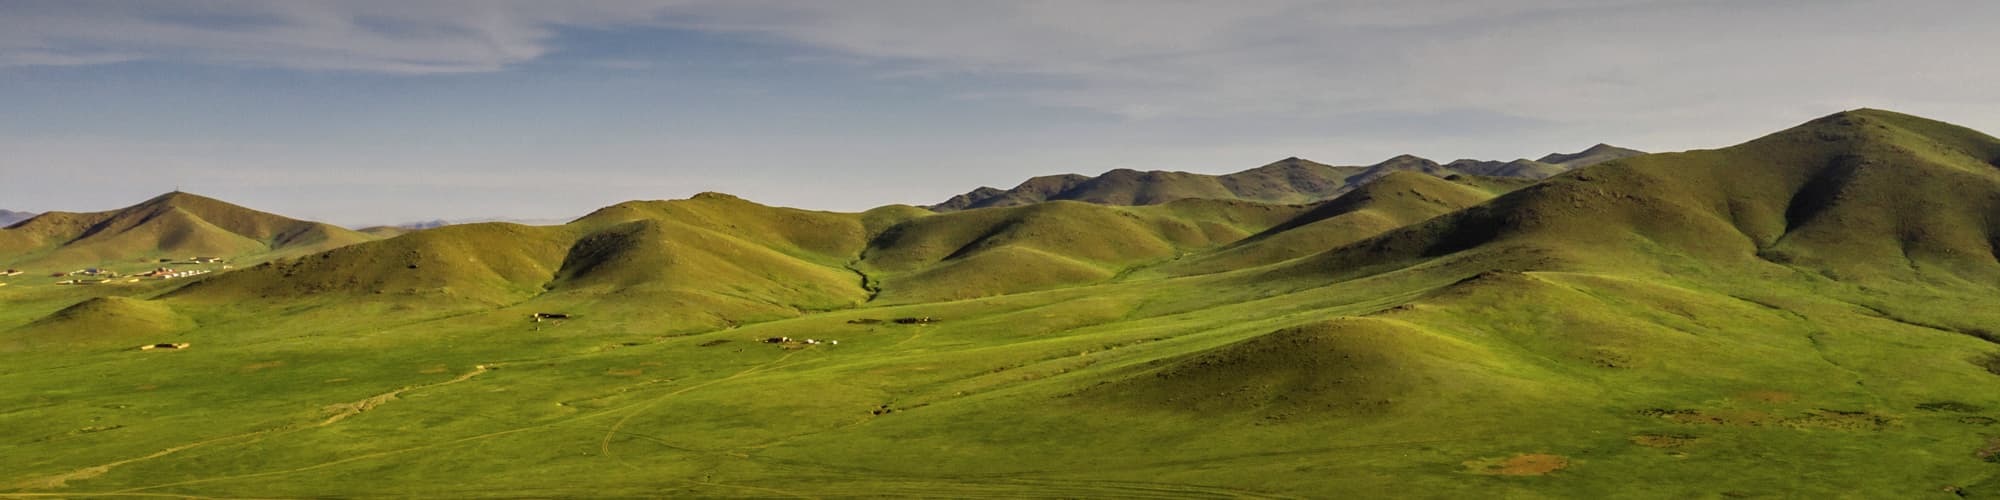 Voyage en groupe Mongolie © Robert Churchill / iStock